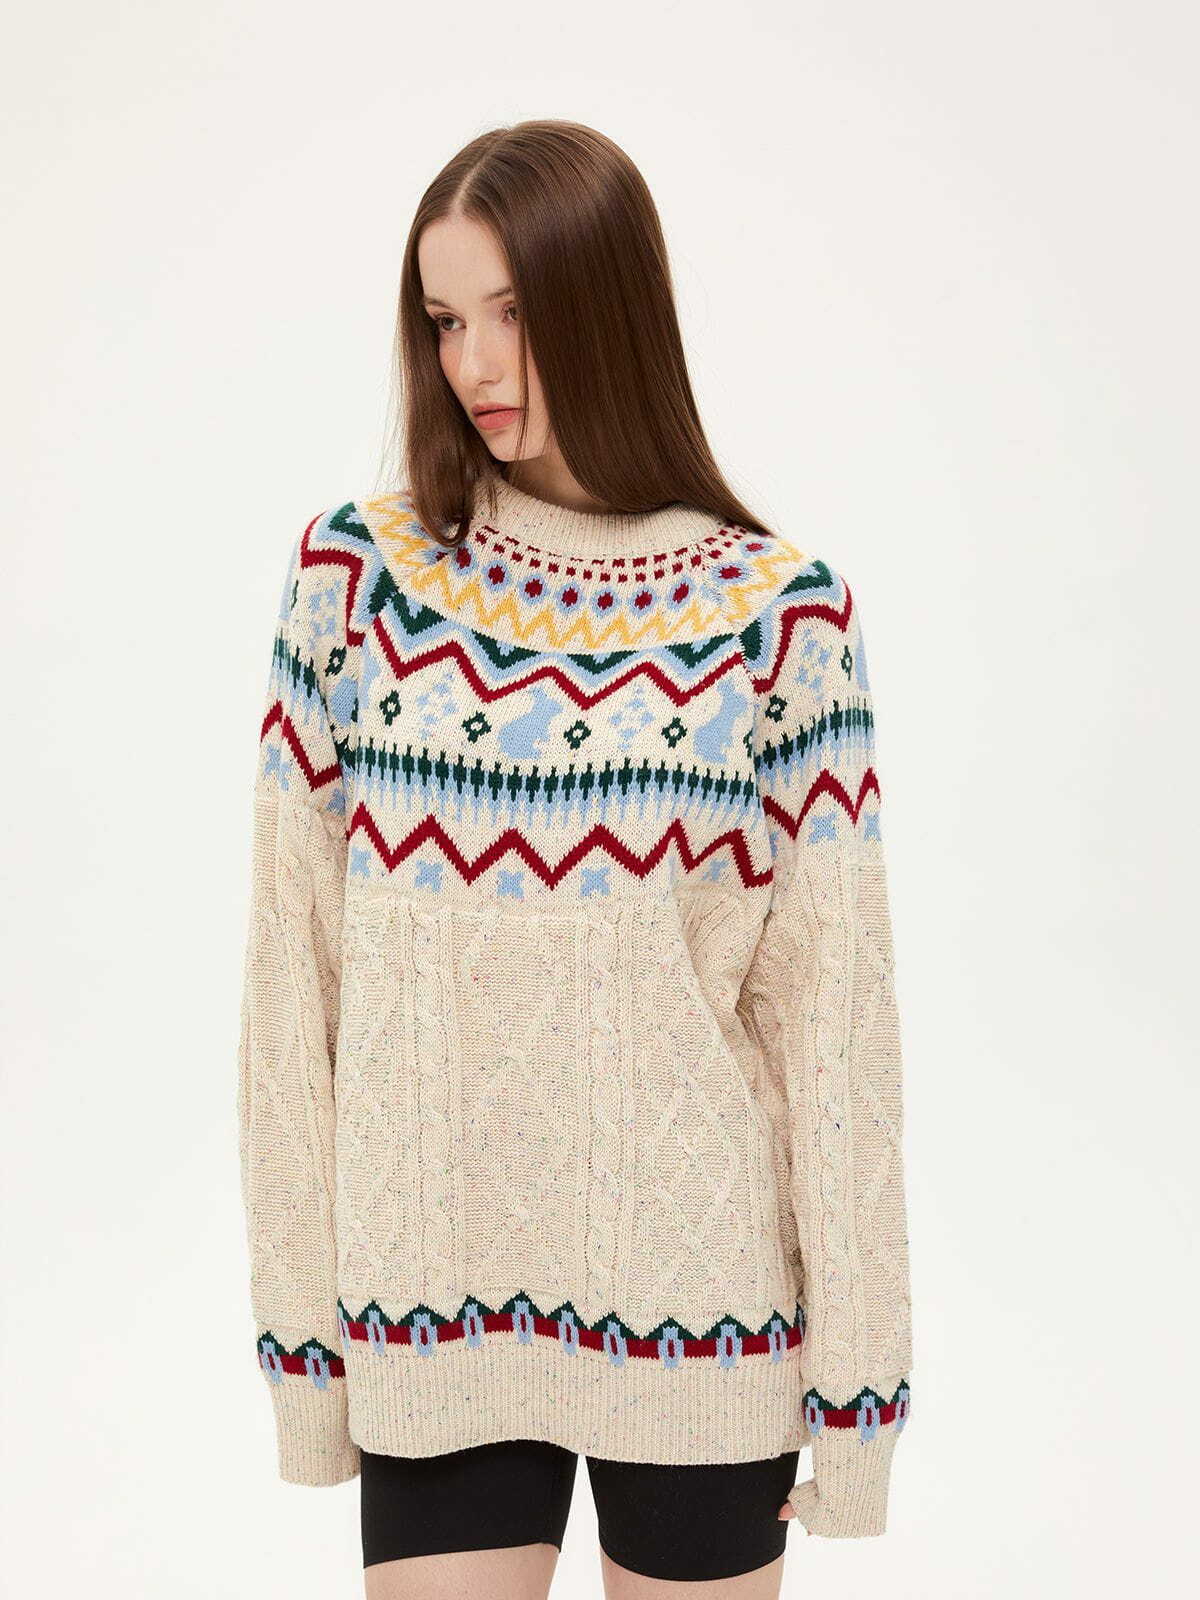 fair isle knit sweater cozy retro charm 3750